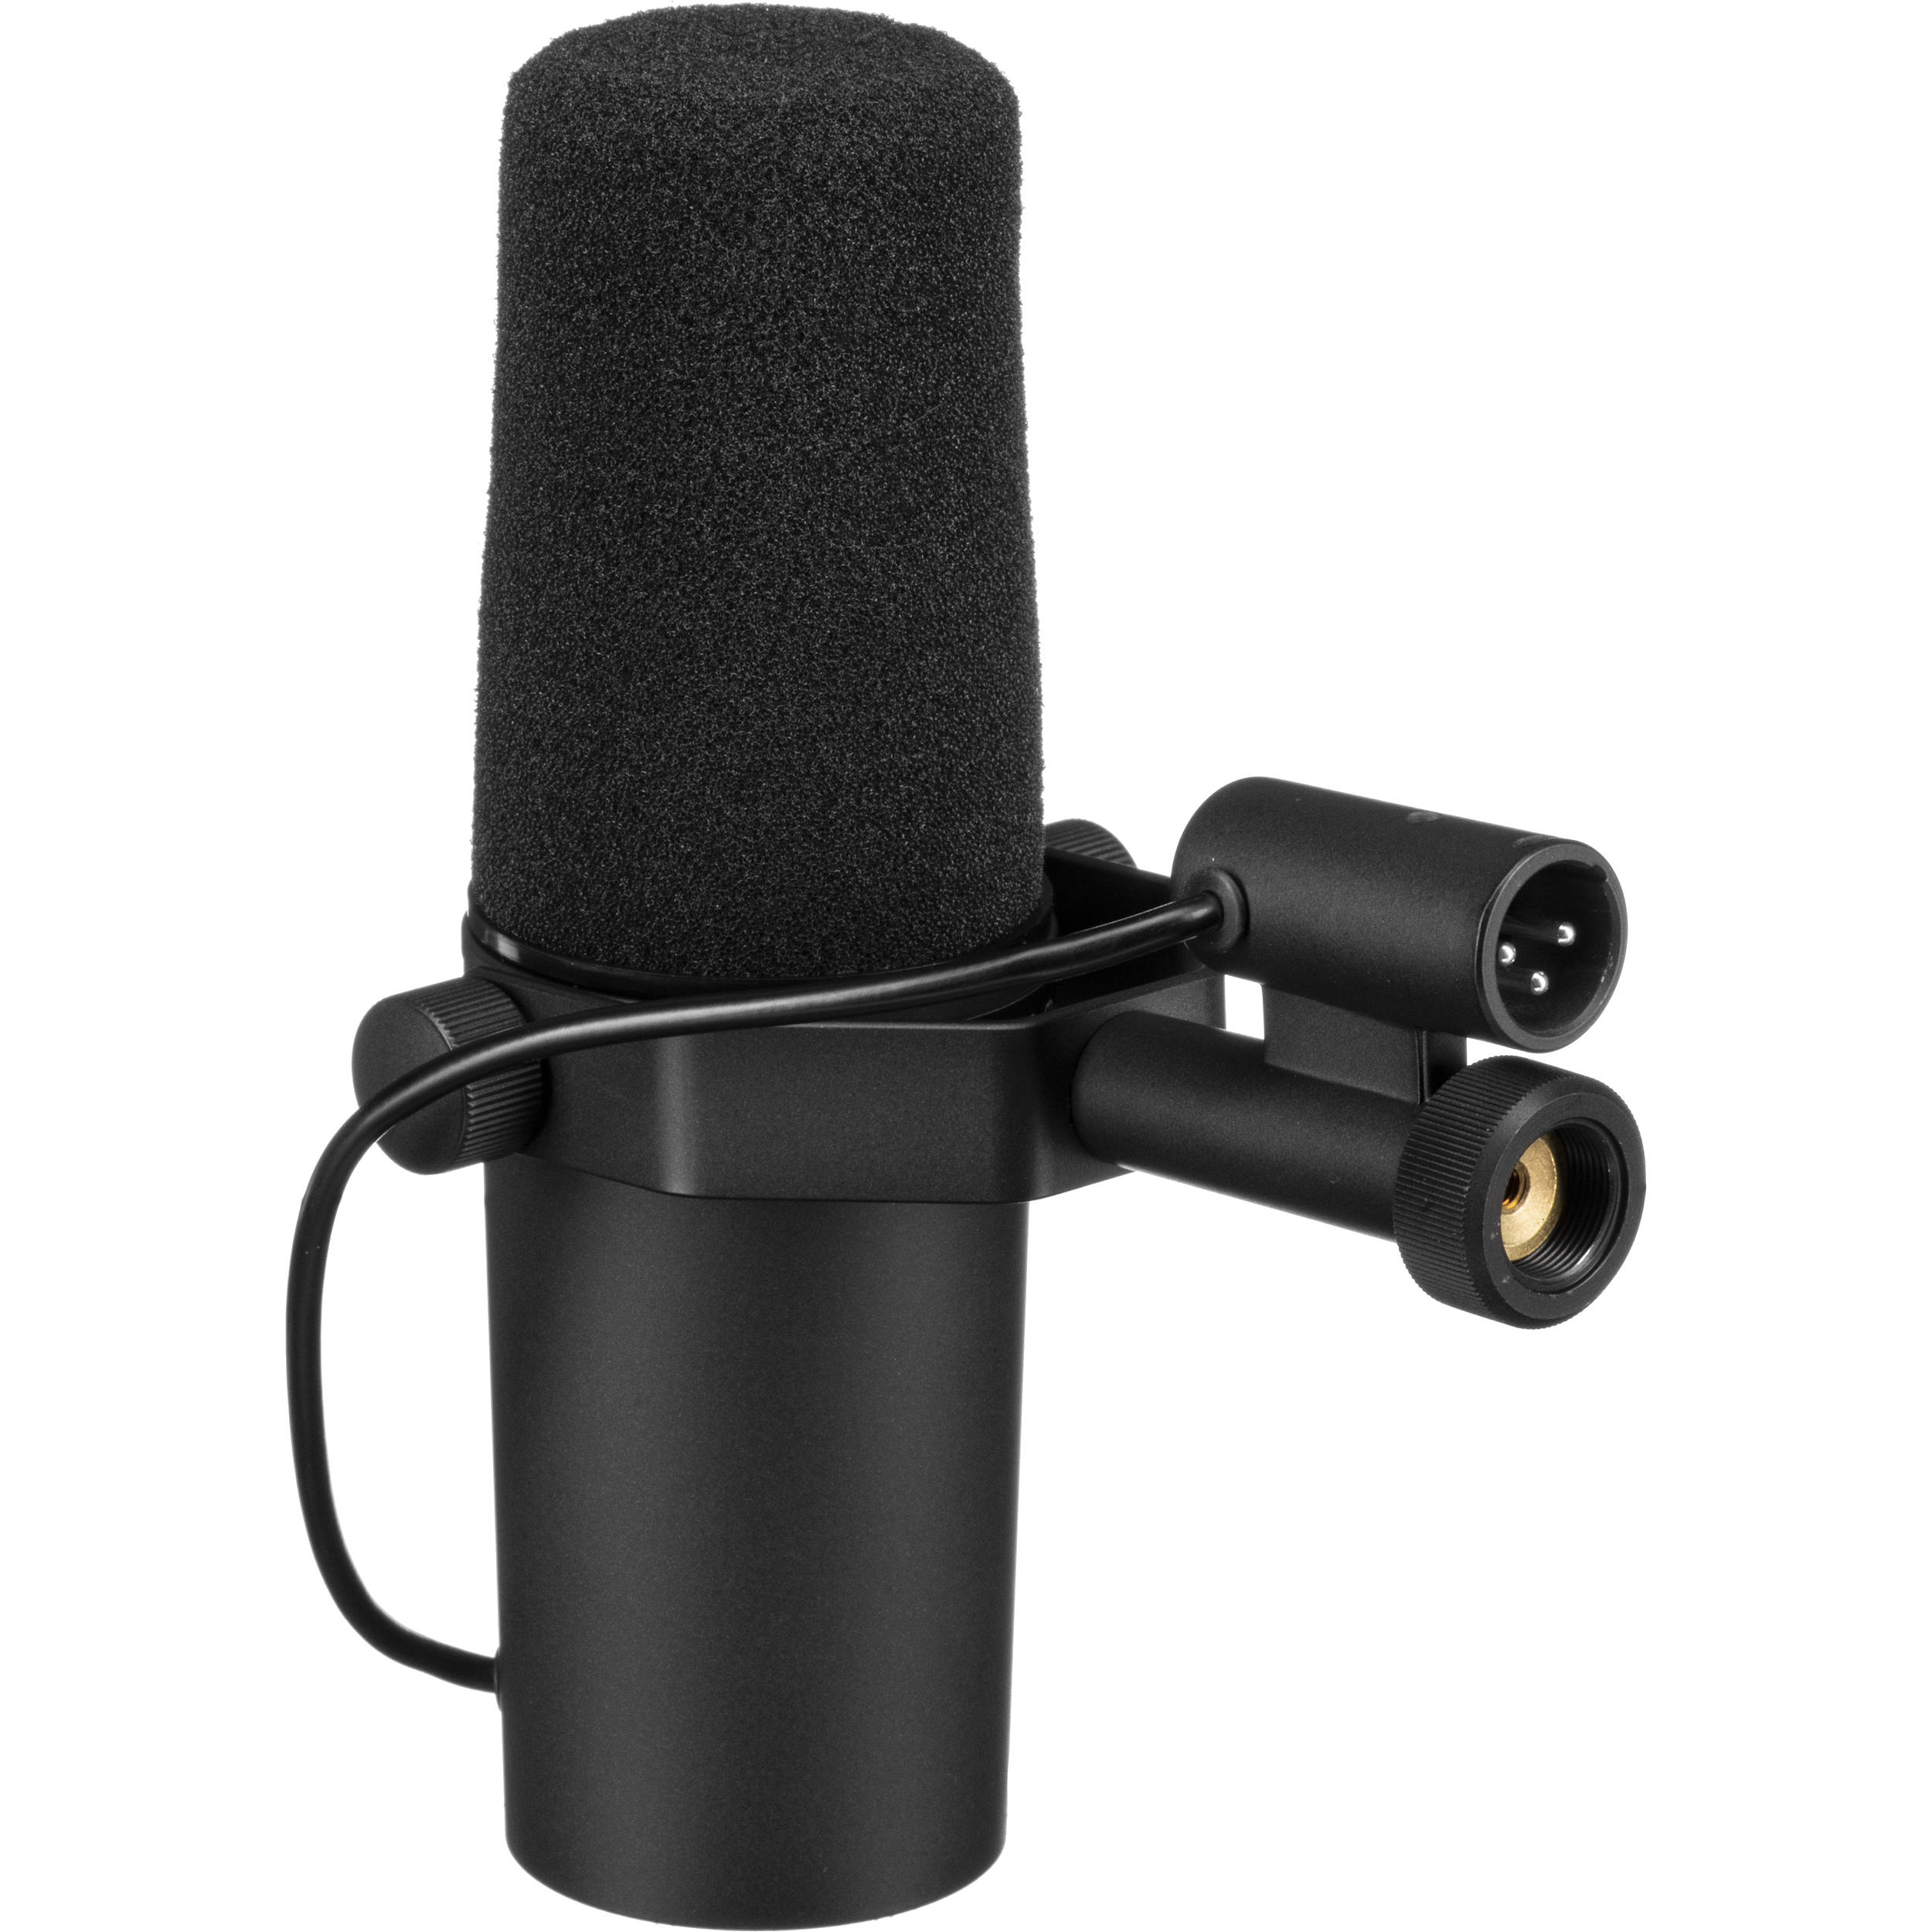 Shure Sm7b Vocal Microphone Sm7b B H Photo Video